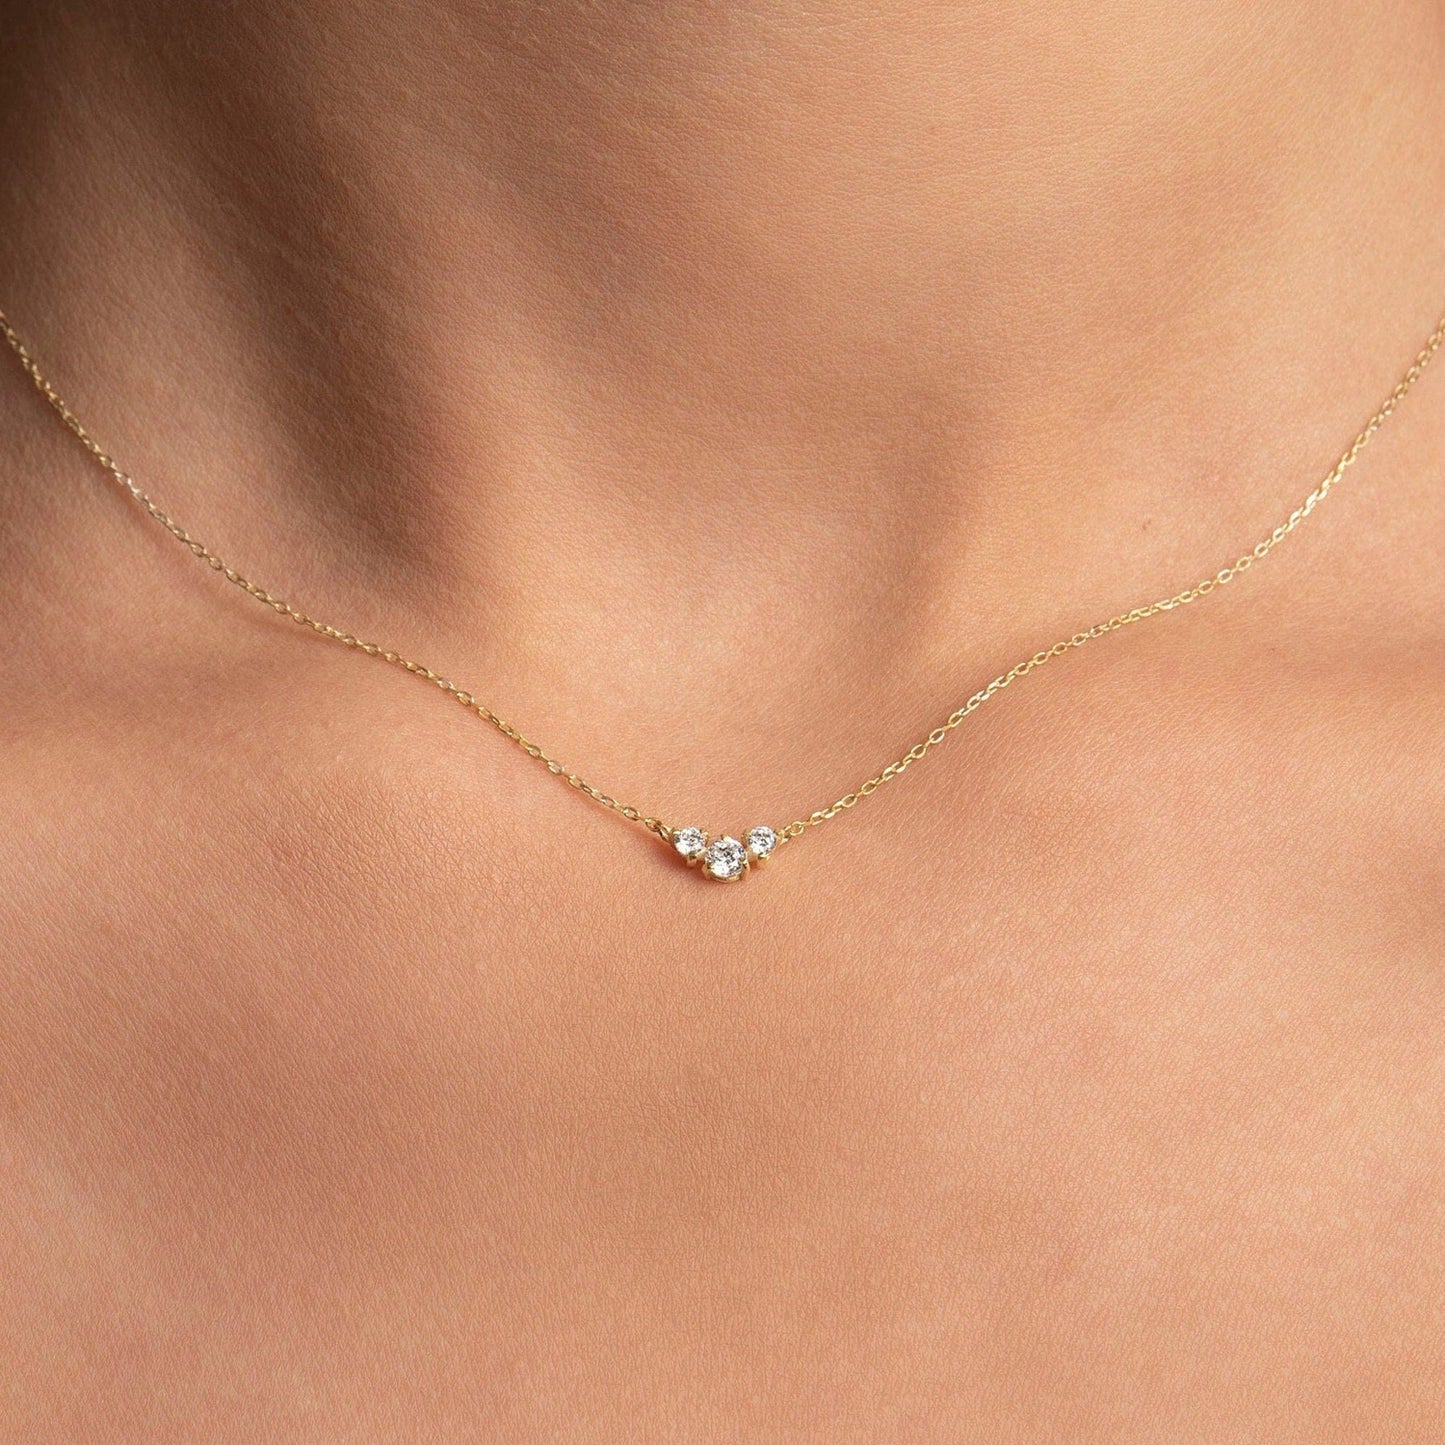 Three Diamond Necklace \ 14k Gold Trio Diamond Necklace 0.16ct \ Dainty Diamond Necklace \ Delicate Necklace for Women \ Christmas Sale